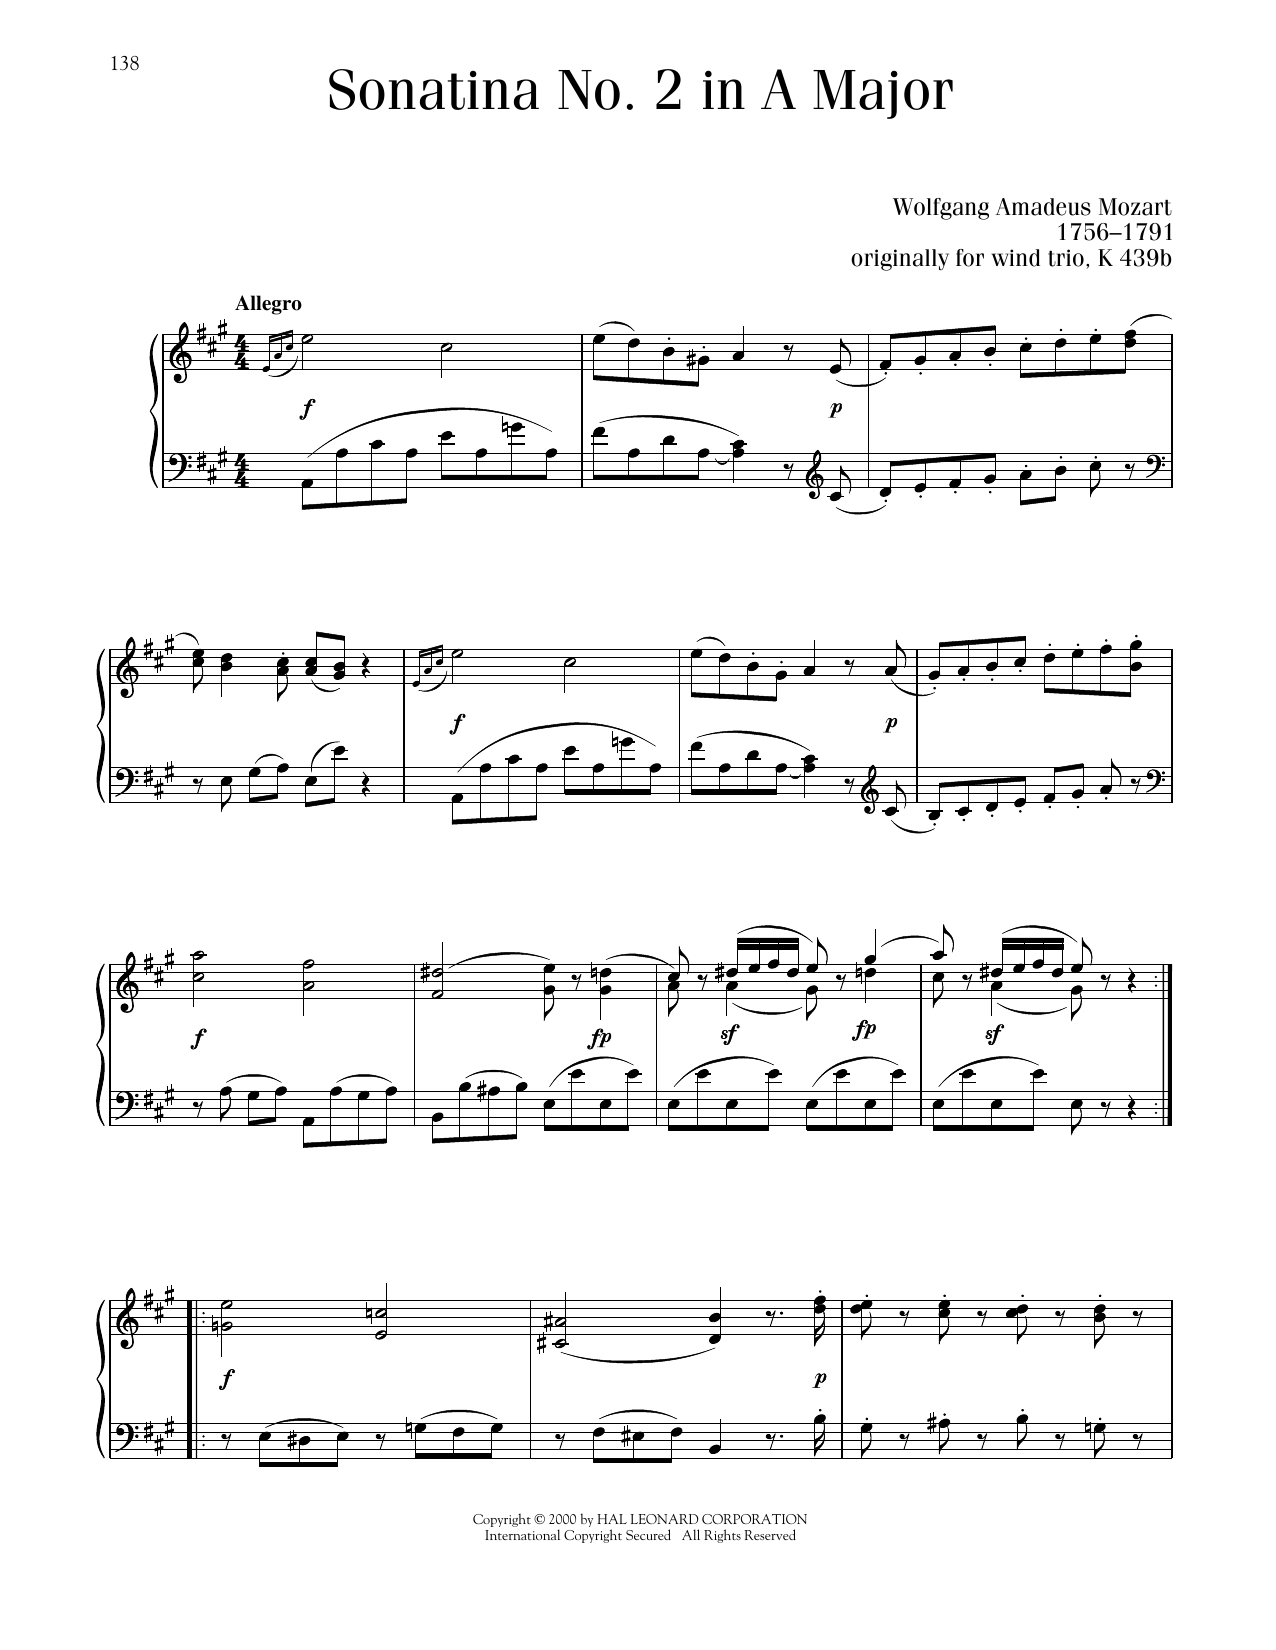 Wolfgang Amadeus Mozart Sonatina No. 2 In A Major sheet music notes printable PDF score